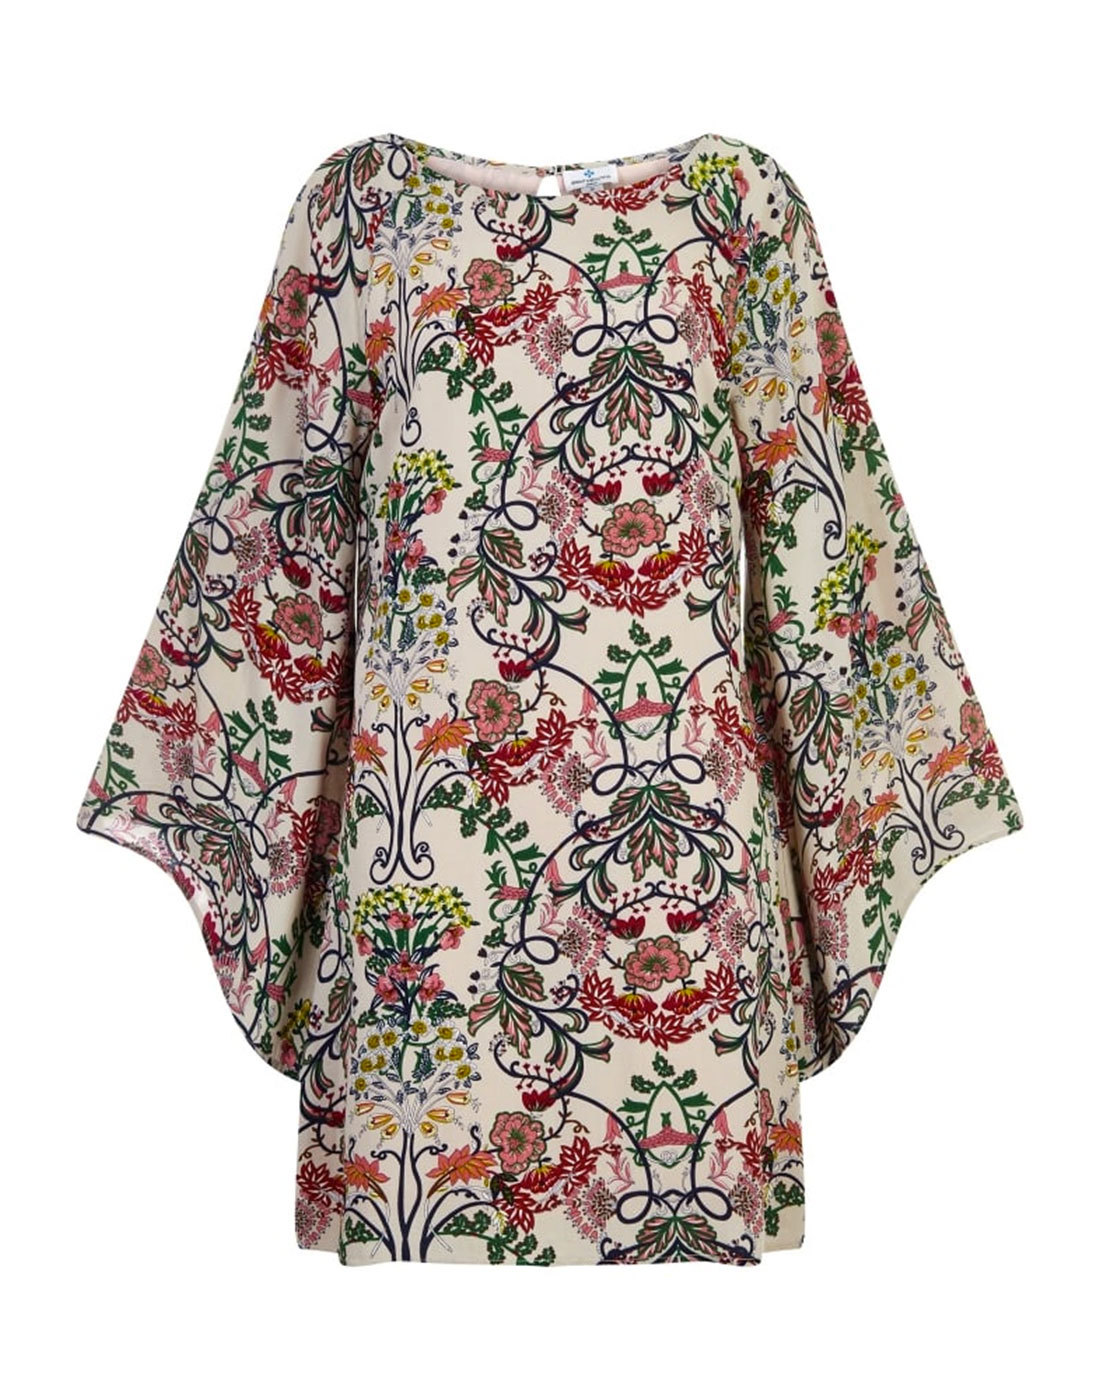 Angel BRIGHT & BEAUTIFUL Retro 1960s Floral Dress